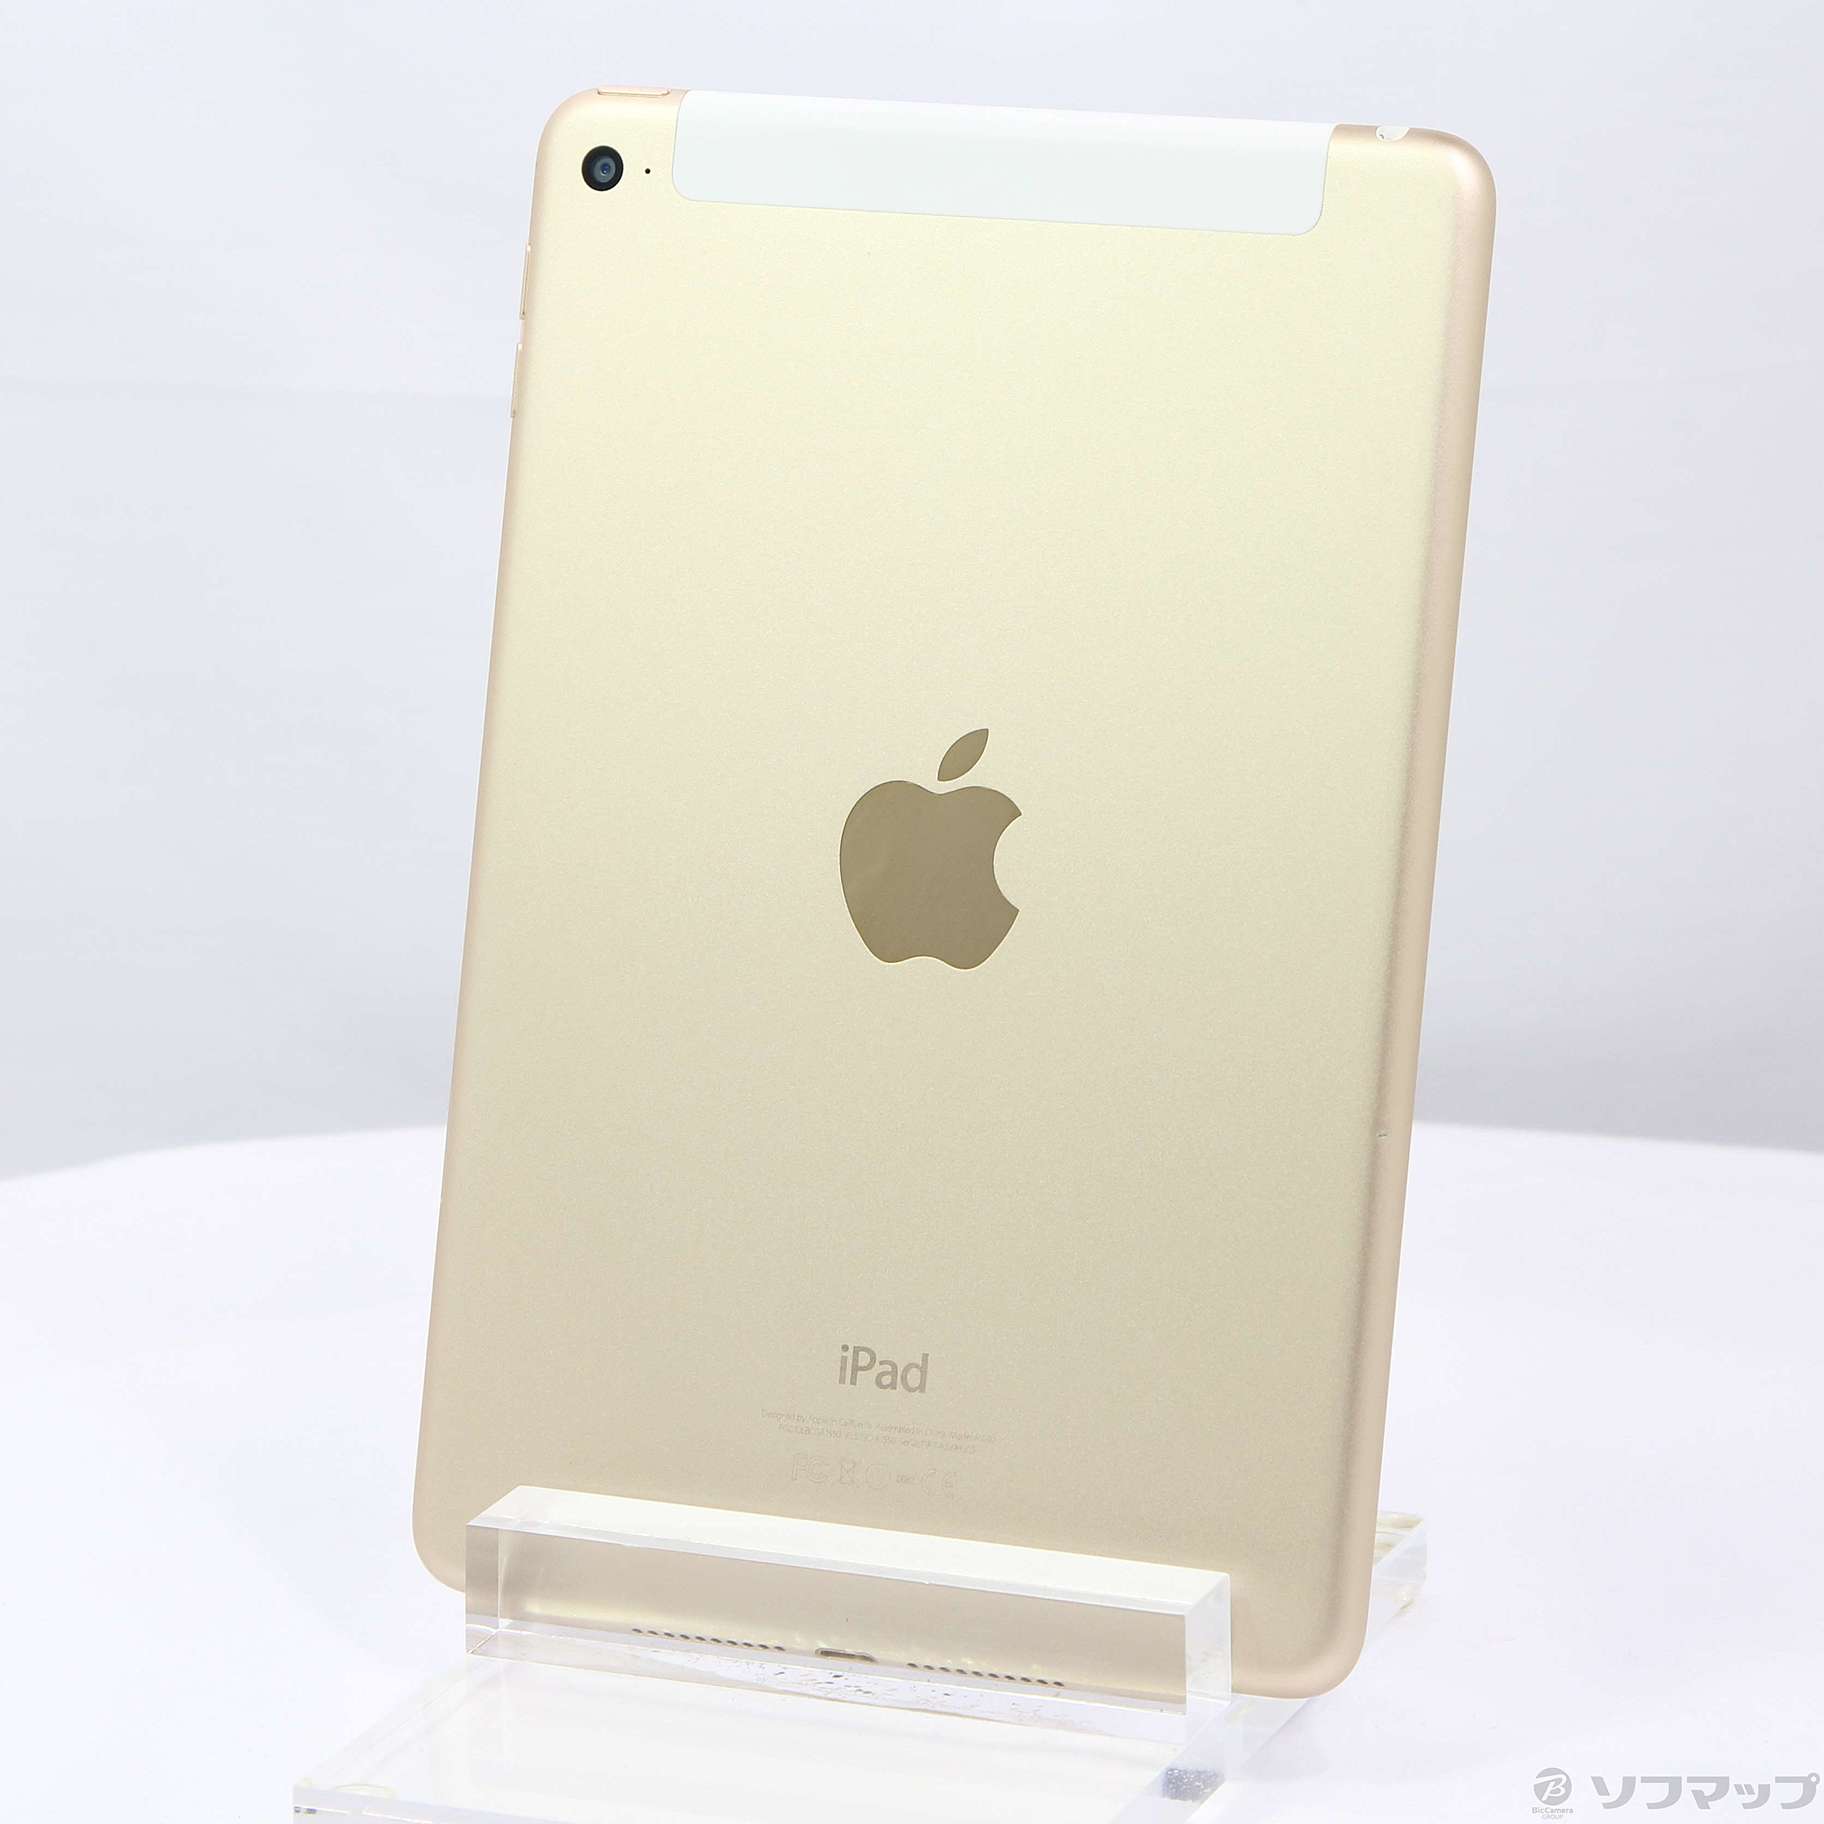 iPadmini4色ipad mini4 ガラスコーティング済 SIMフリー